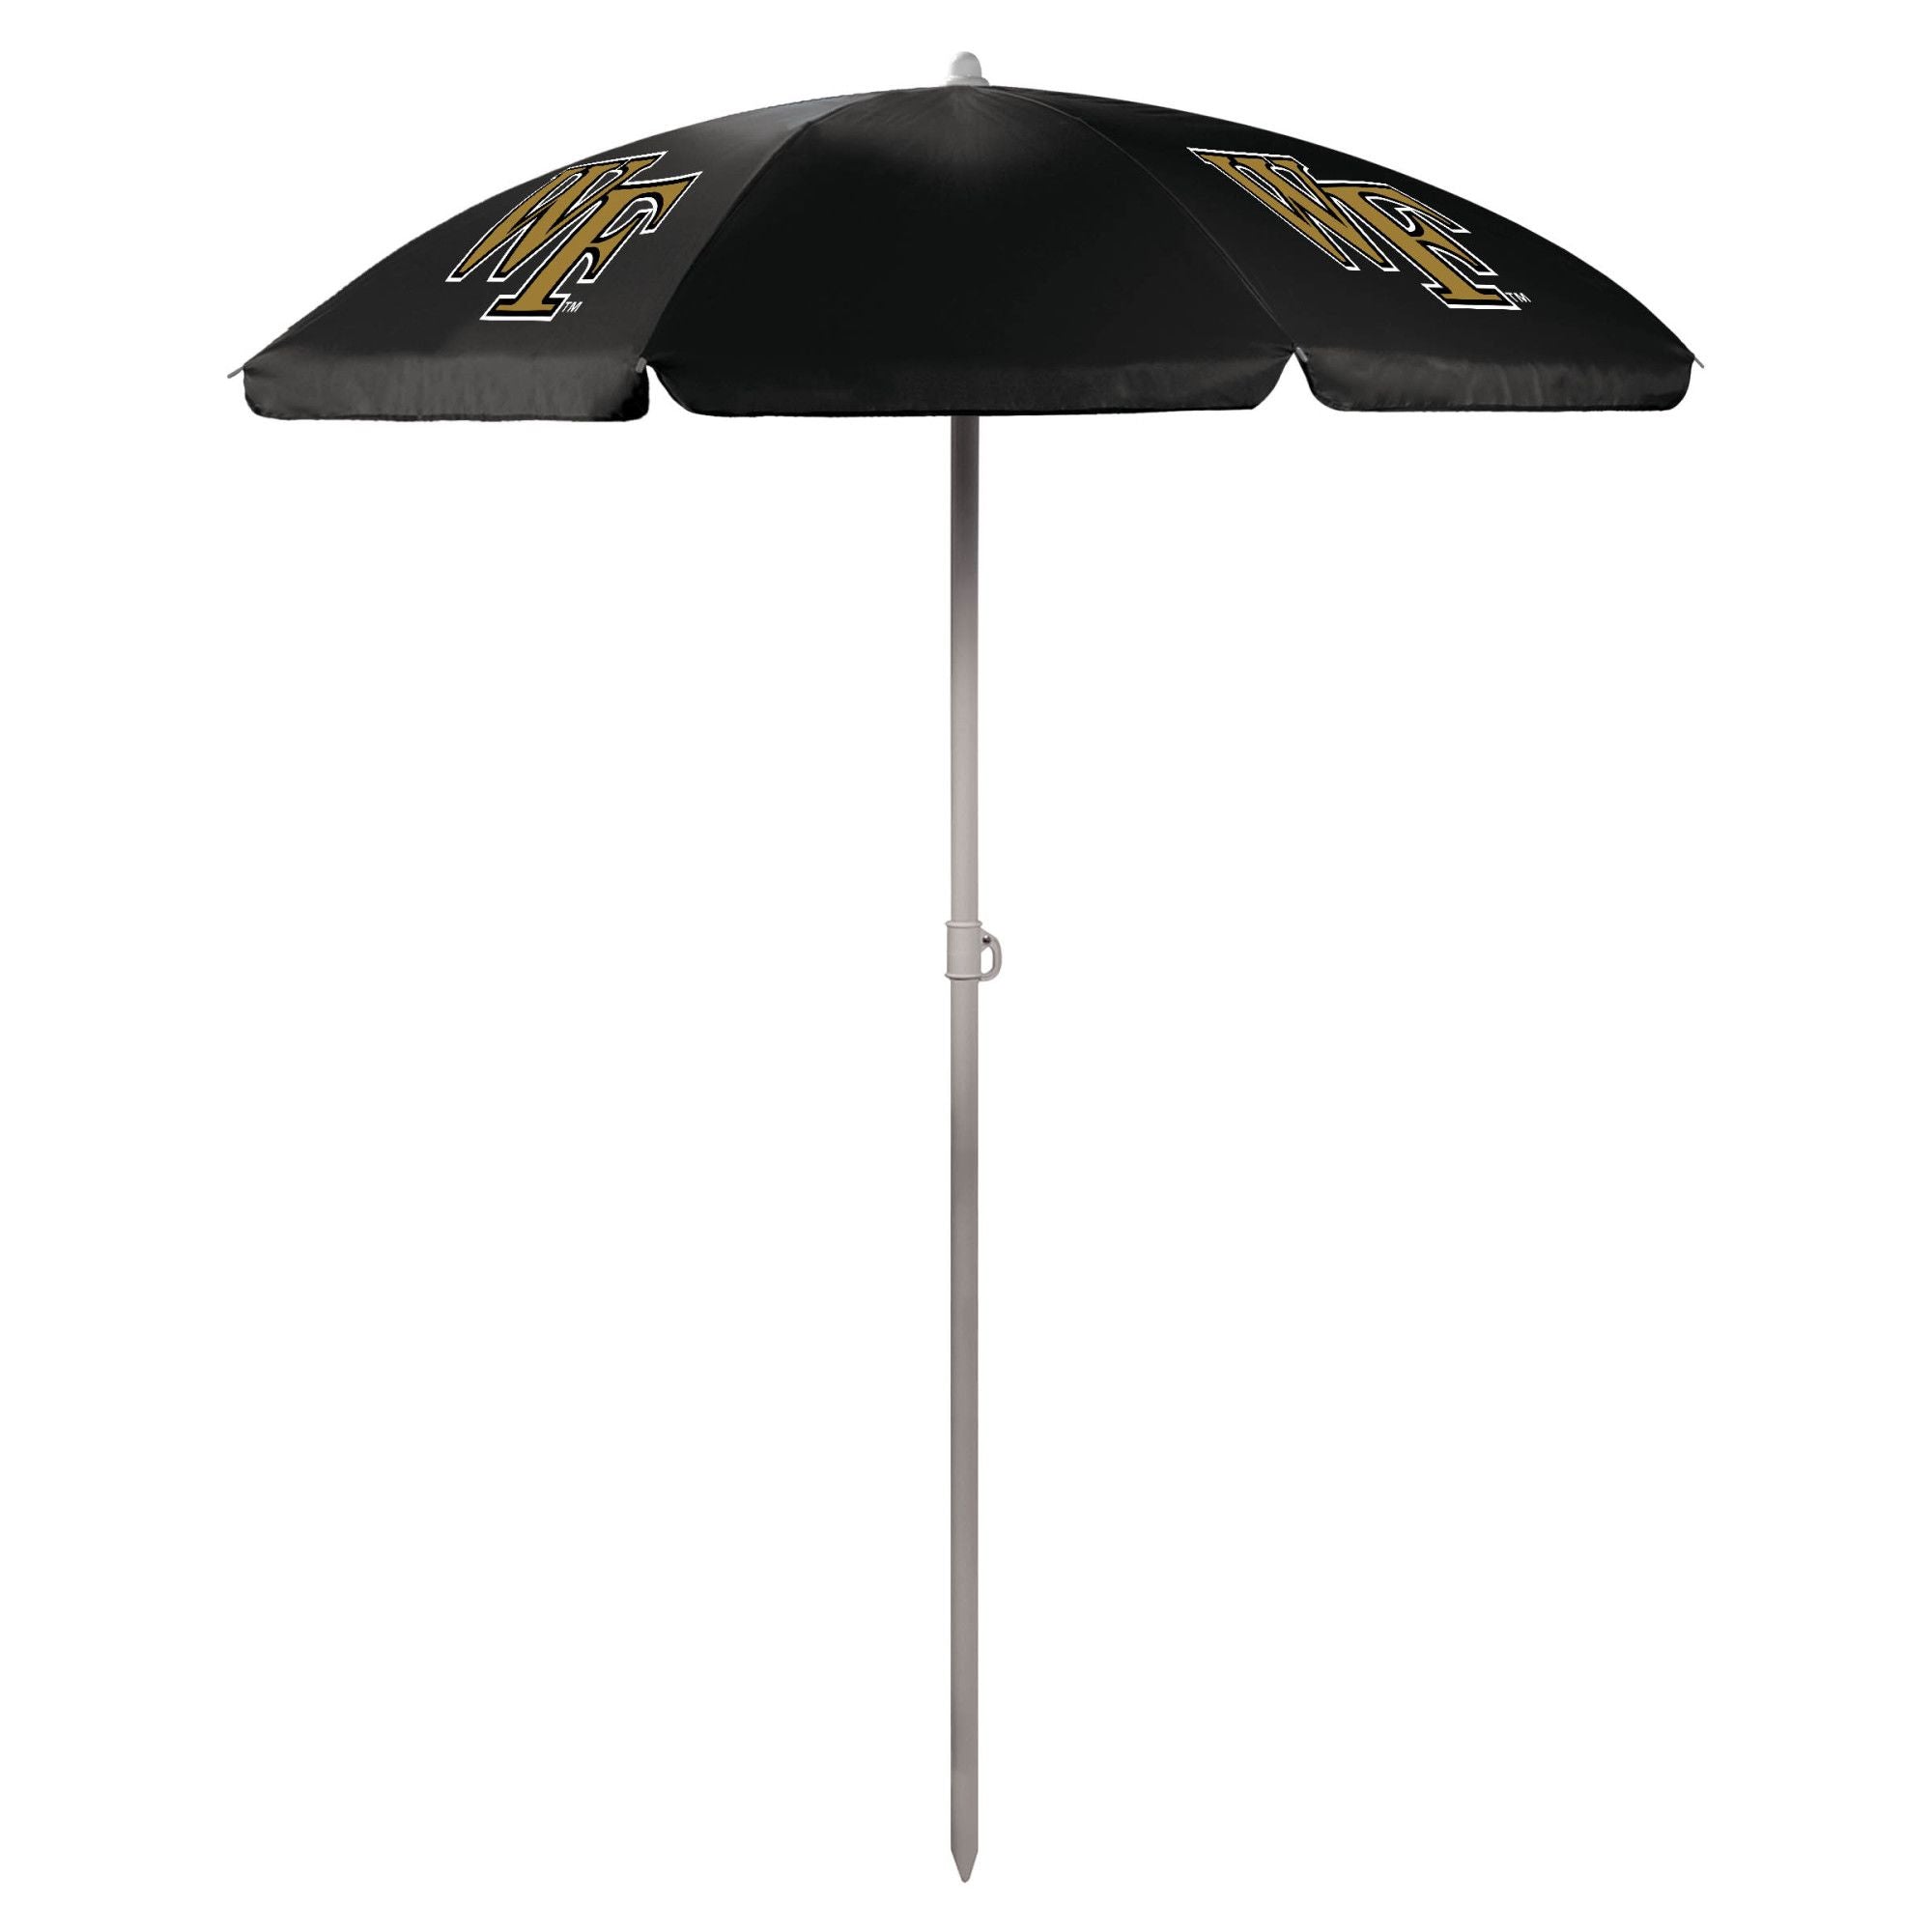 Wake Forest Demon Deacons - 5.5 Ft. Portable Beach Umbrella, (Black)